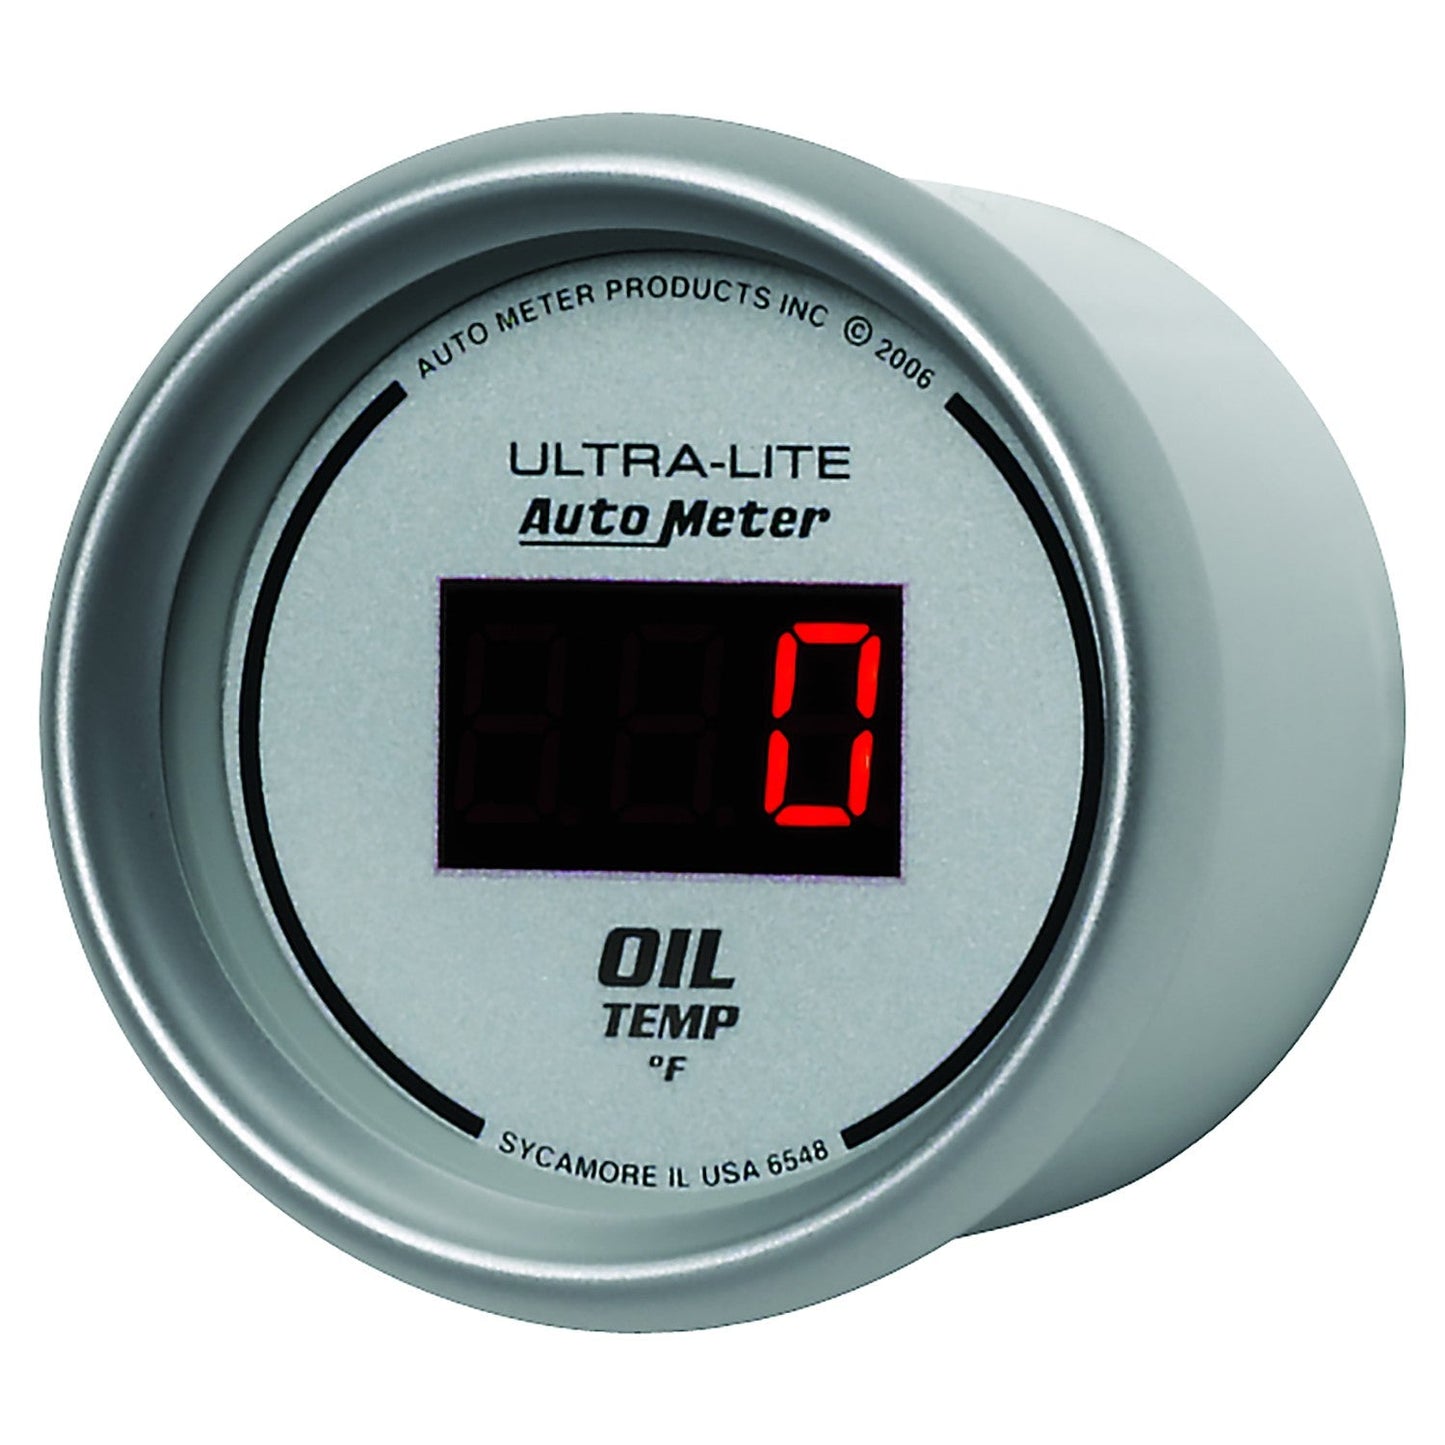 AutoMeter - 2-1/16" OIL TEMPERATURE, 0-340 °F, ULTRA-LITE DIGITAL (6548)